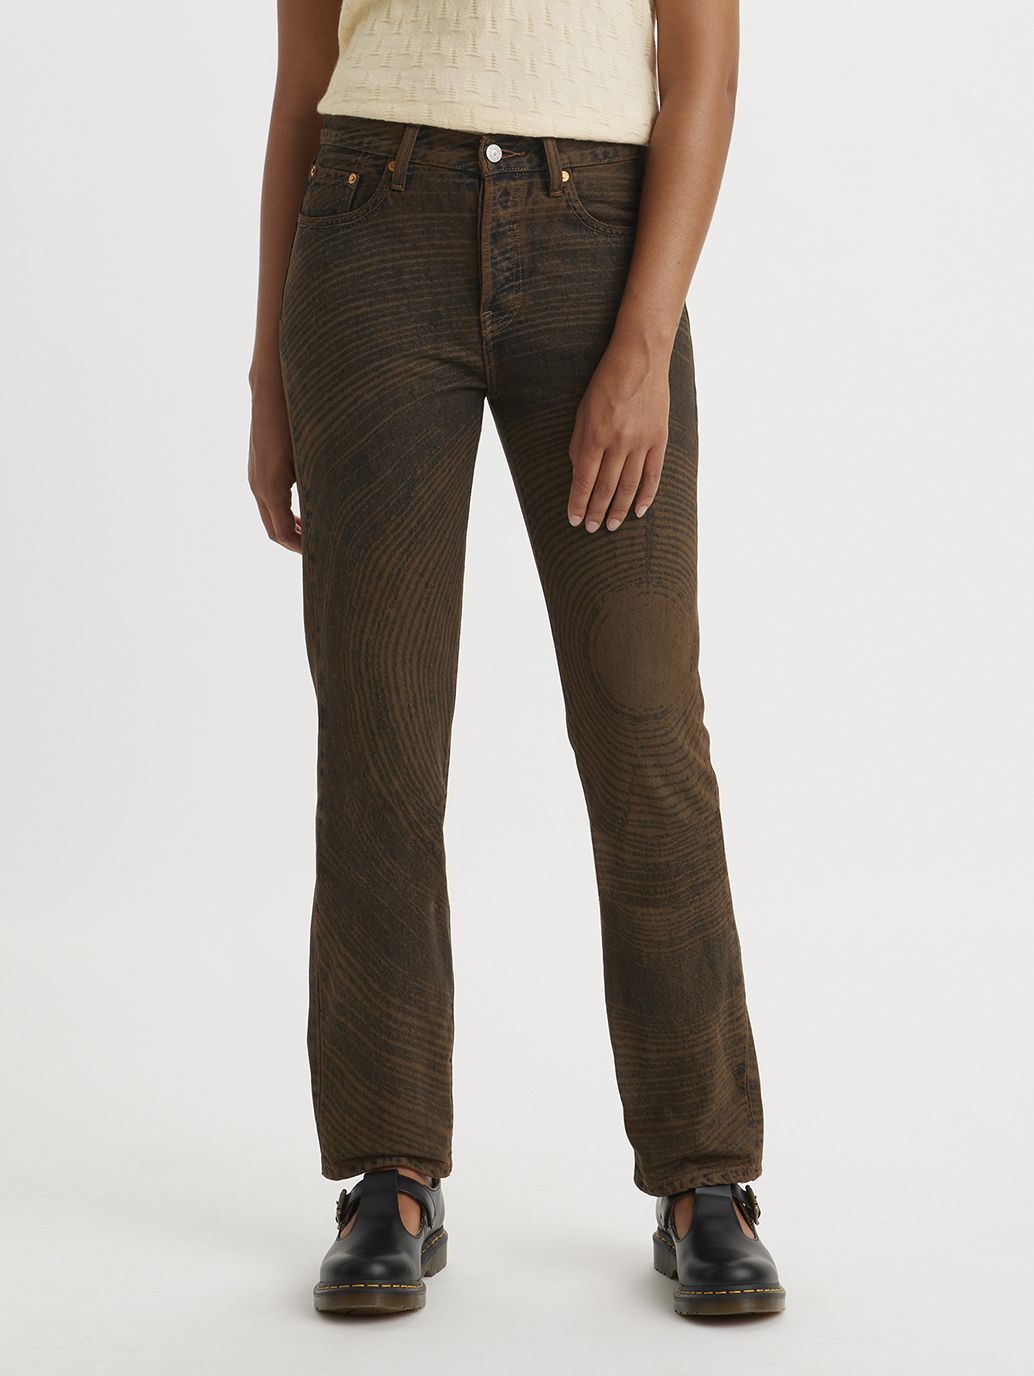 Emma Chamberlain Women's 501® Original Jeans in Brown overdye-Women's  Clothing at Levi's®